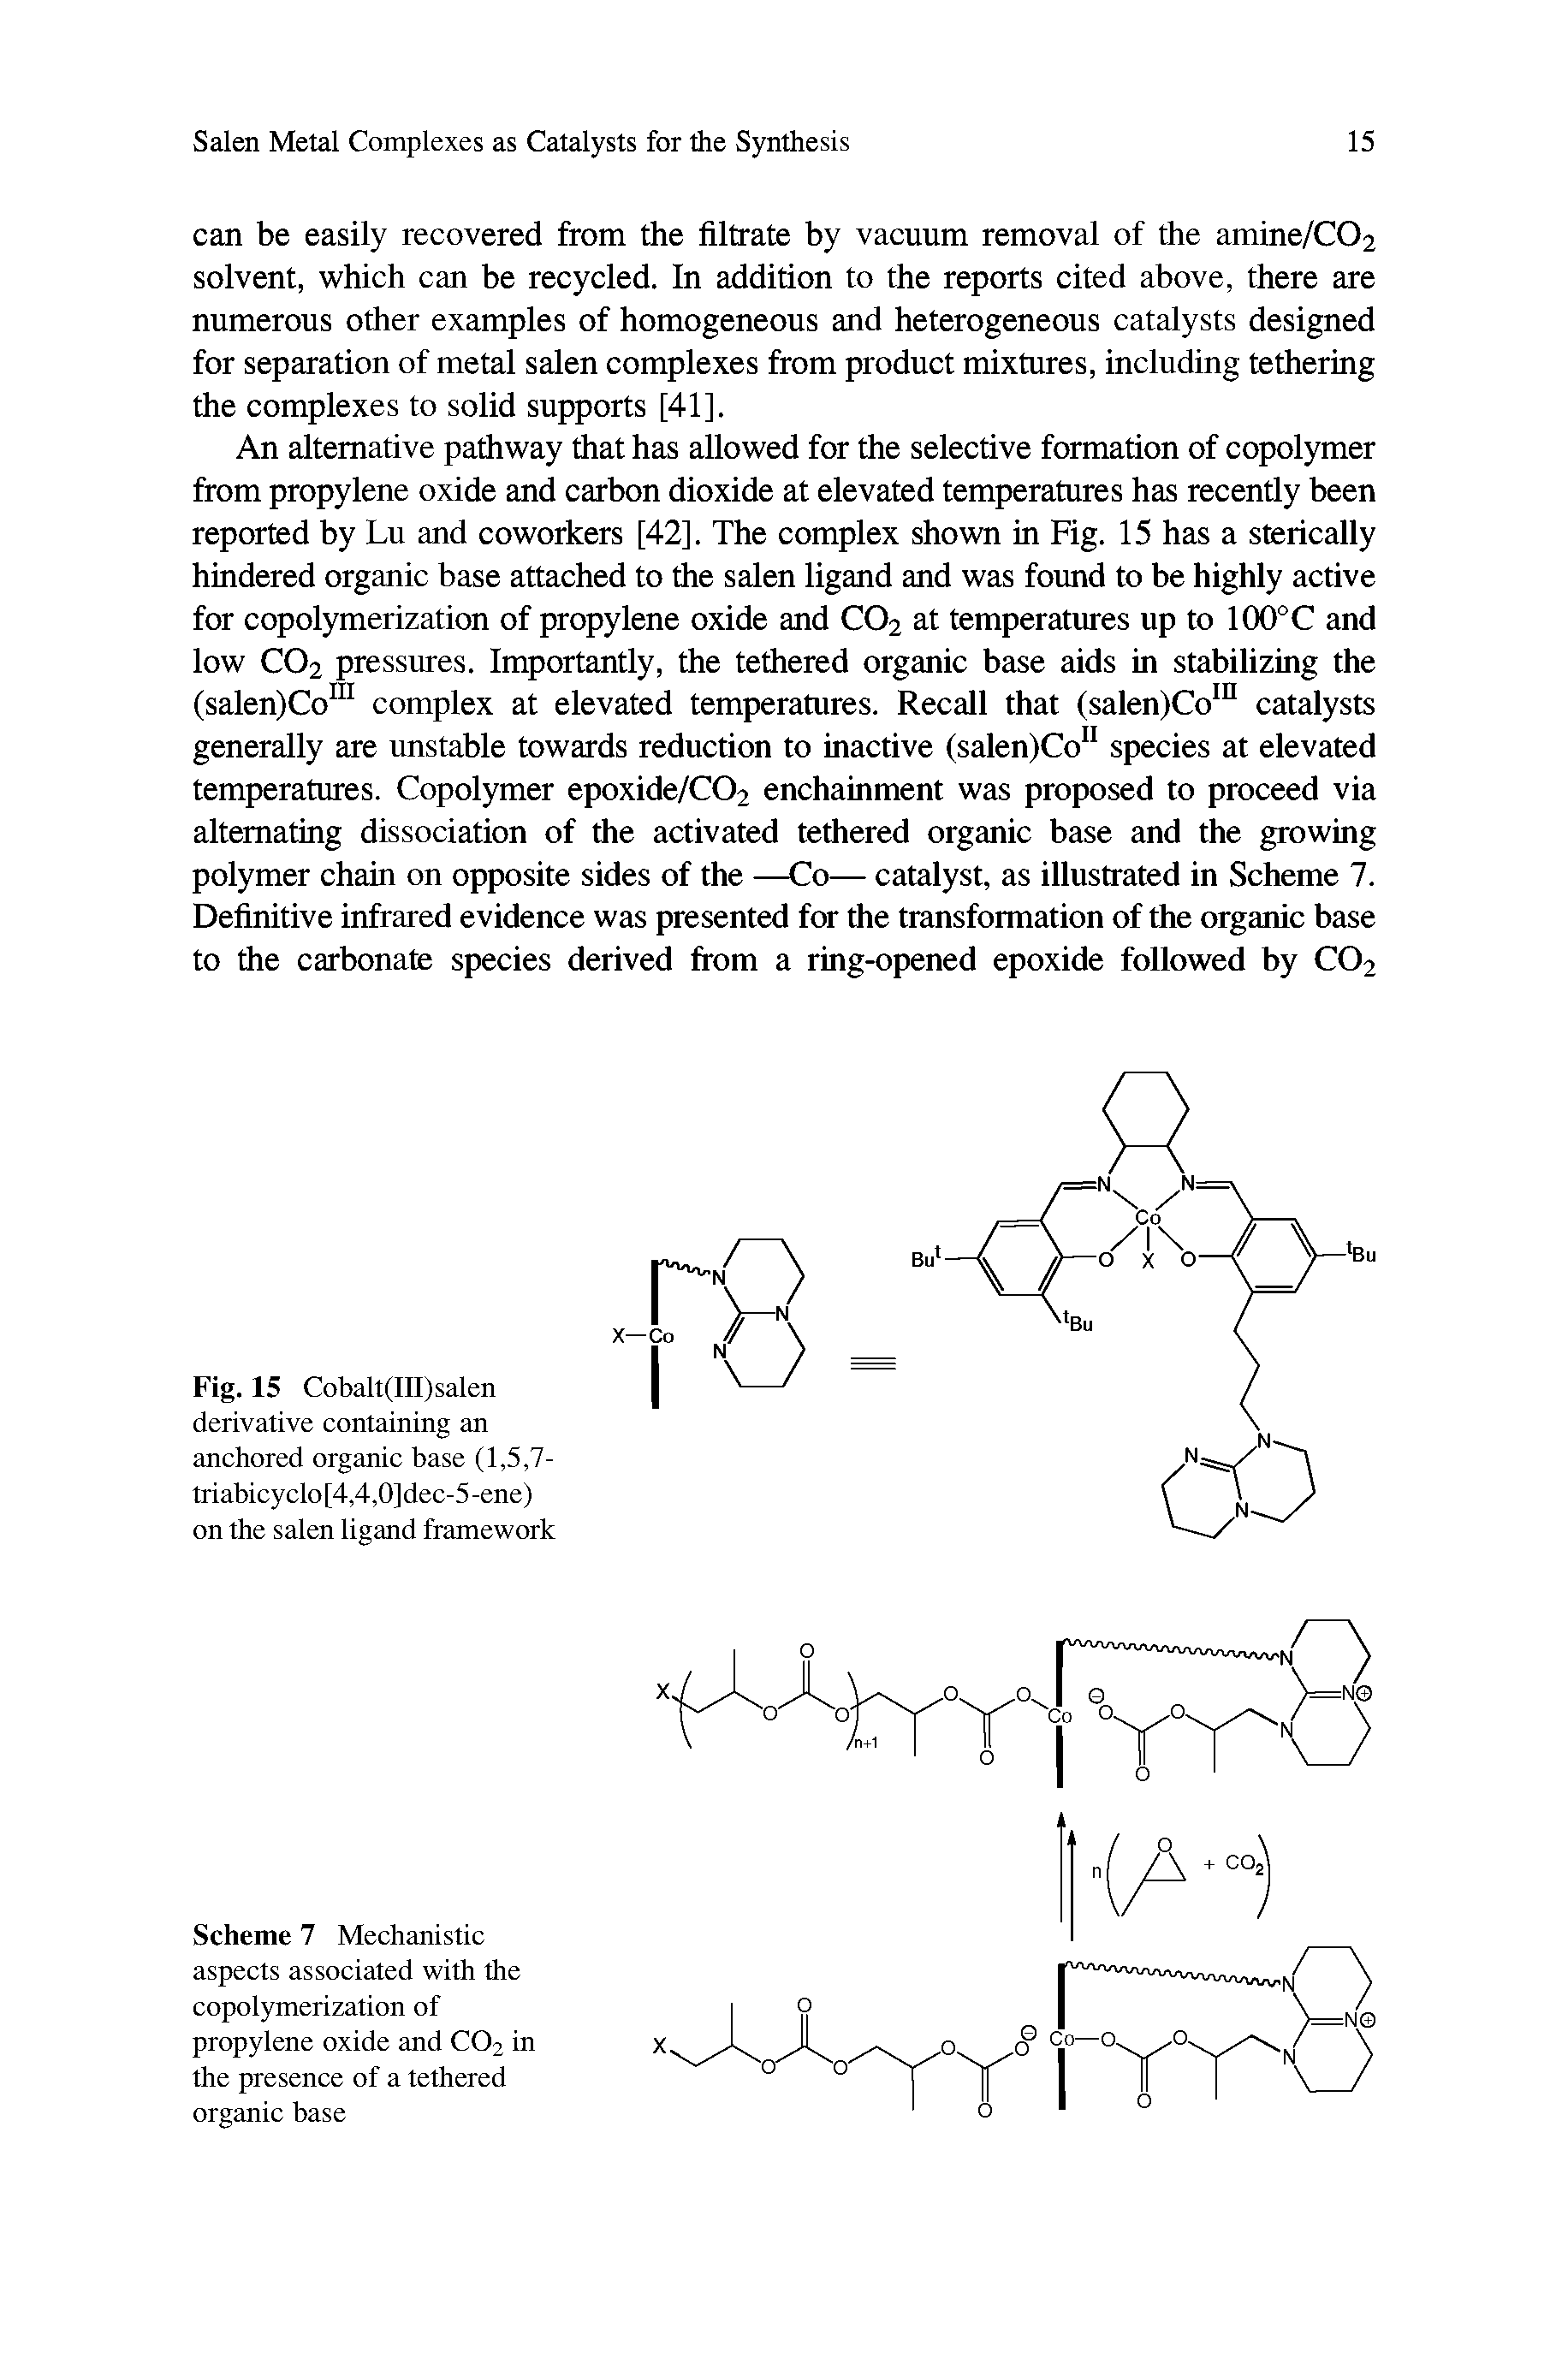 Fig. 15 Cobalt(III)salen derivative containing an anchored organic base (1,5,7-triabicyclo[4,4,0]dec-5-ene) on the salen ligand framework...